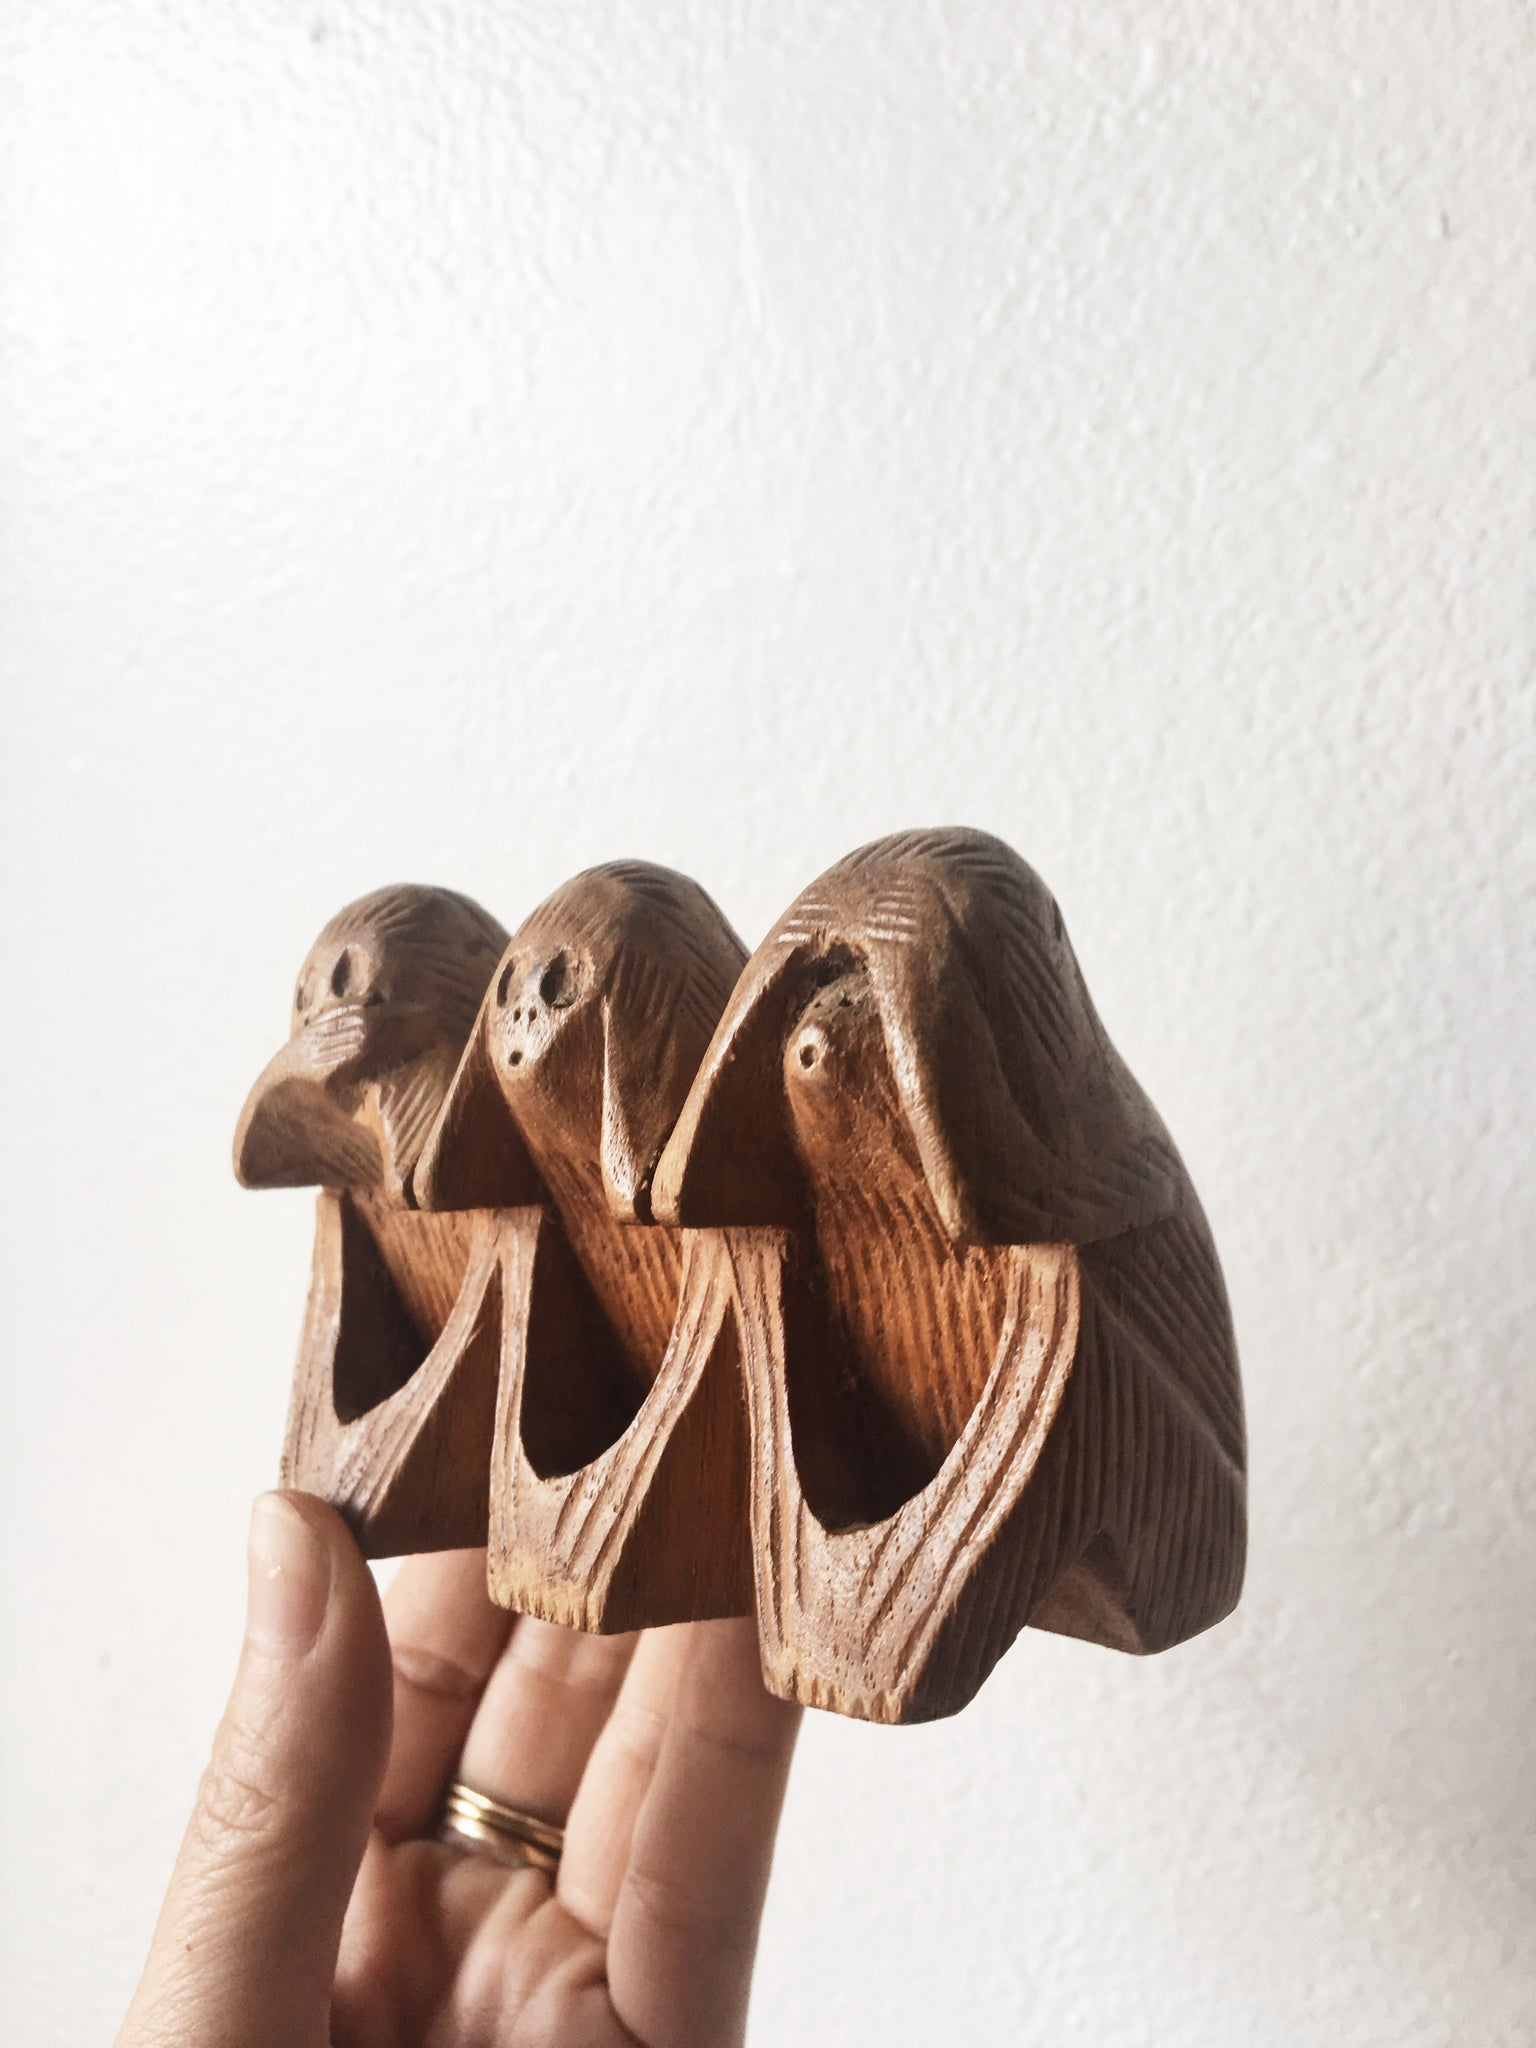 Carved Wood Wise Monkeys